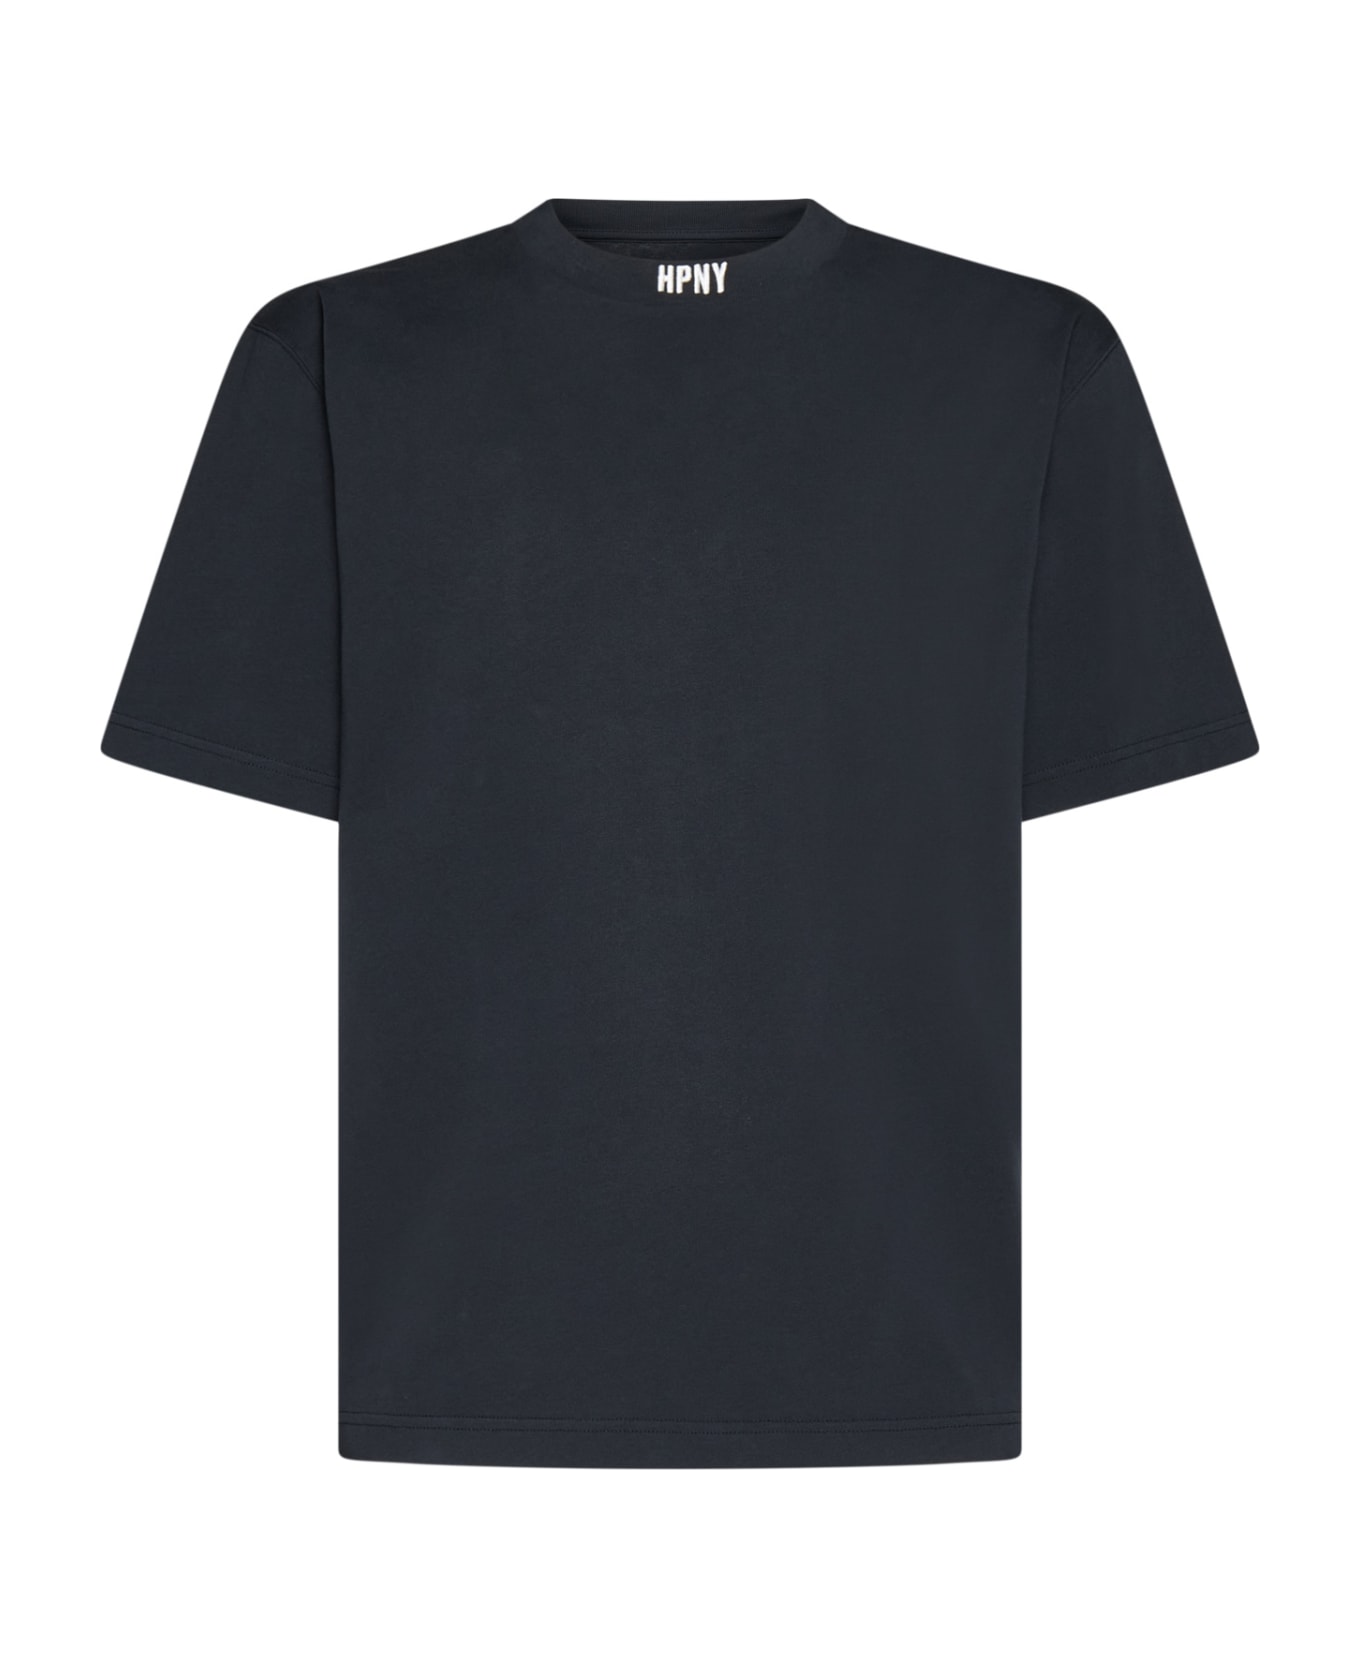 HERON PRESTON Hpny Embroidered T-shirt - Black シャツ